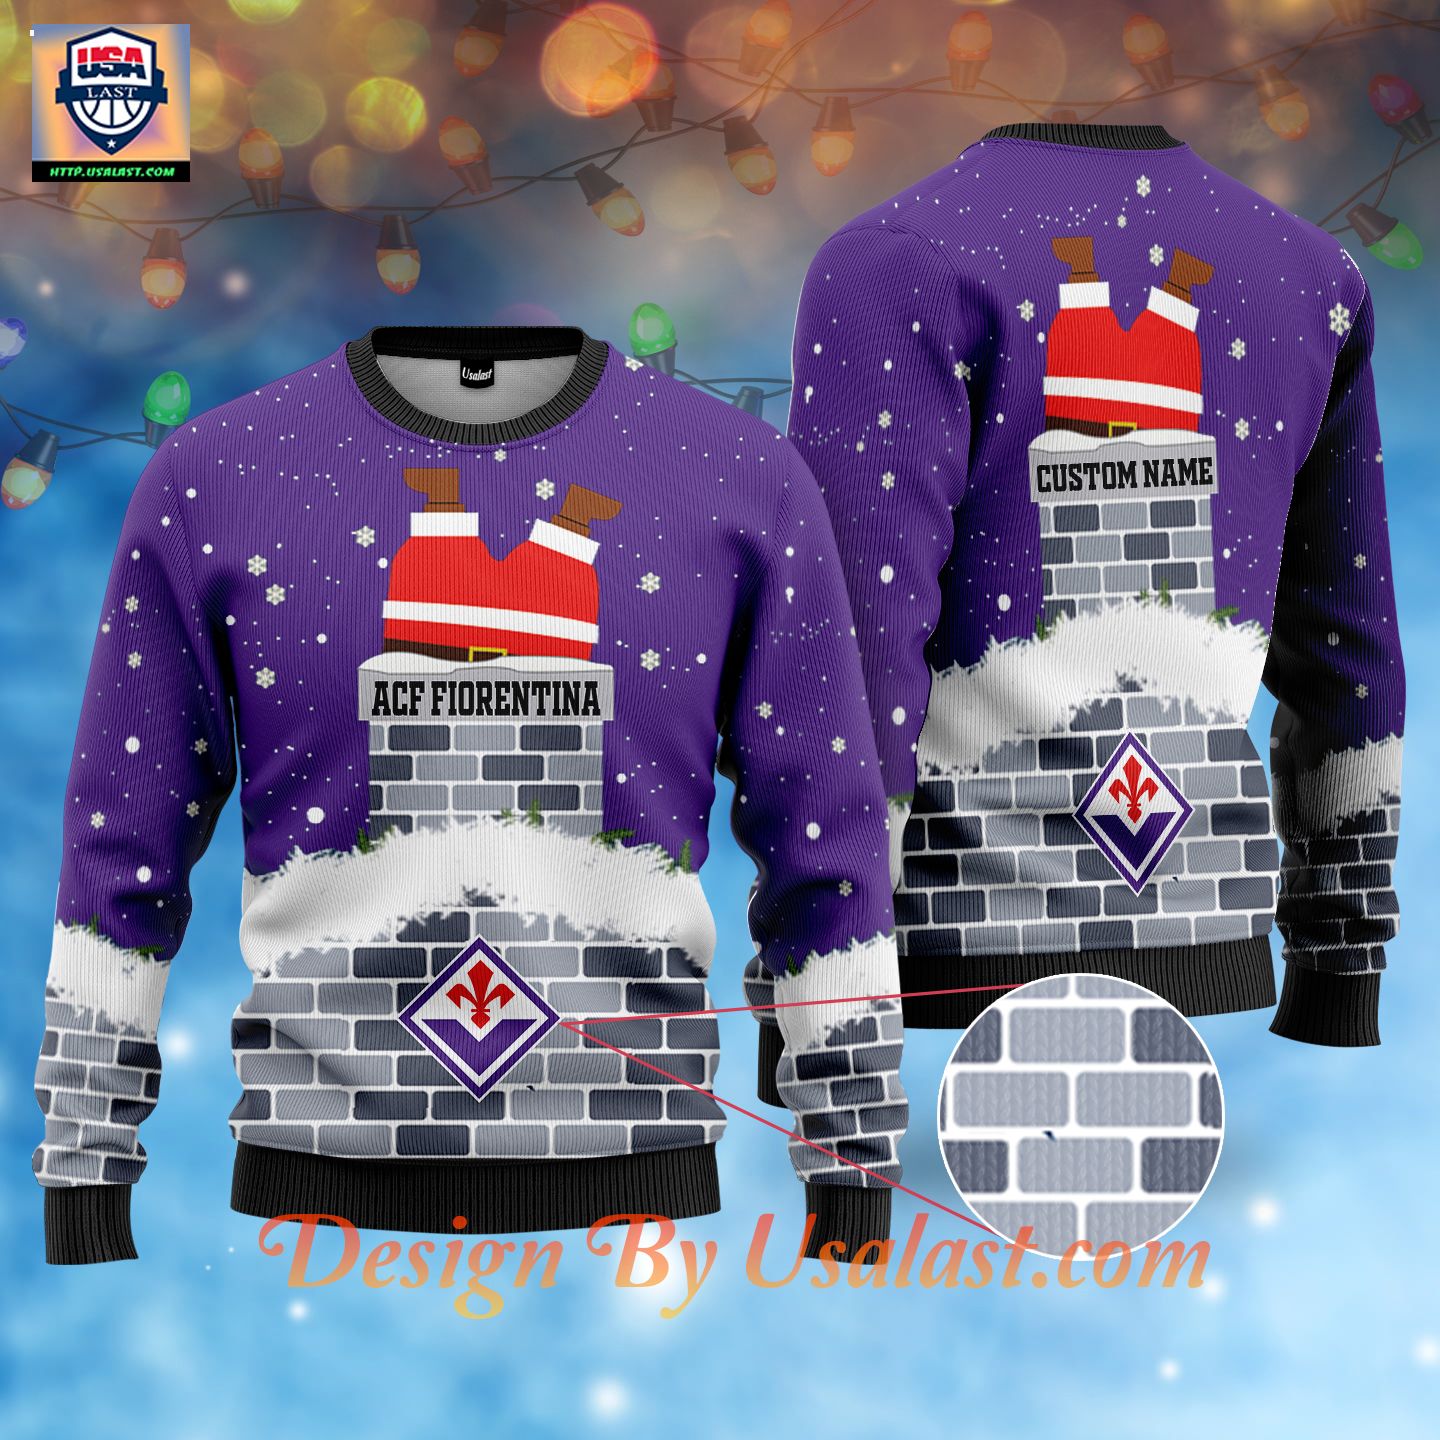 acf-fiorentina-santa-claus-custom-name-ugly-christmas-sweater-1-mPtEn.jpg